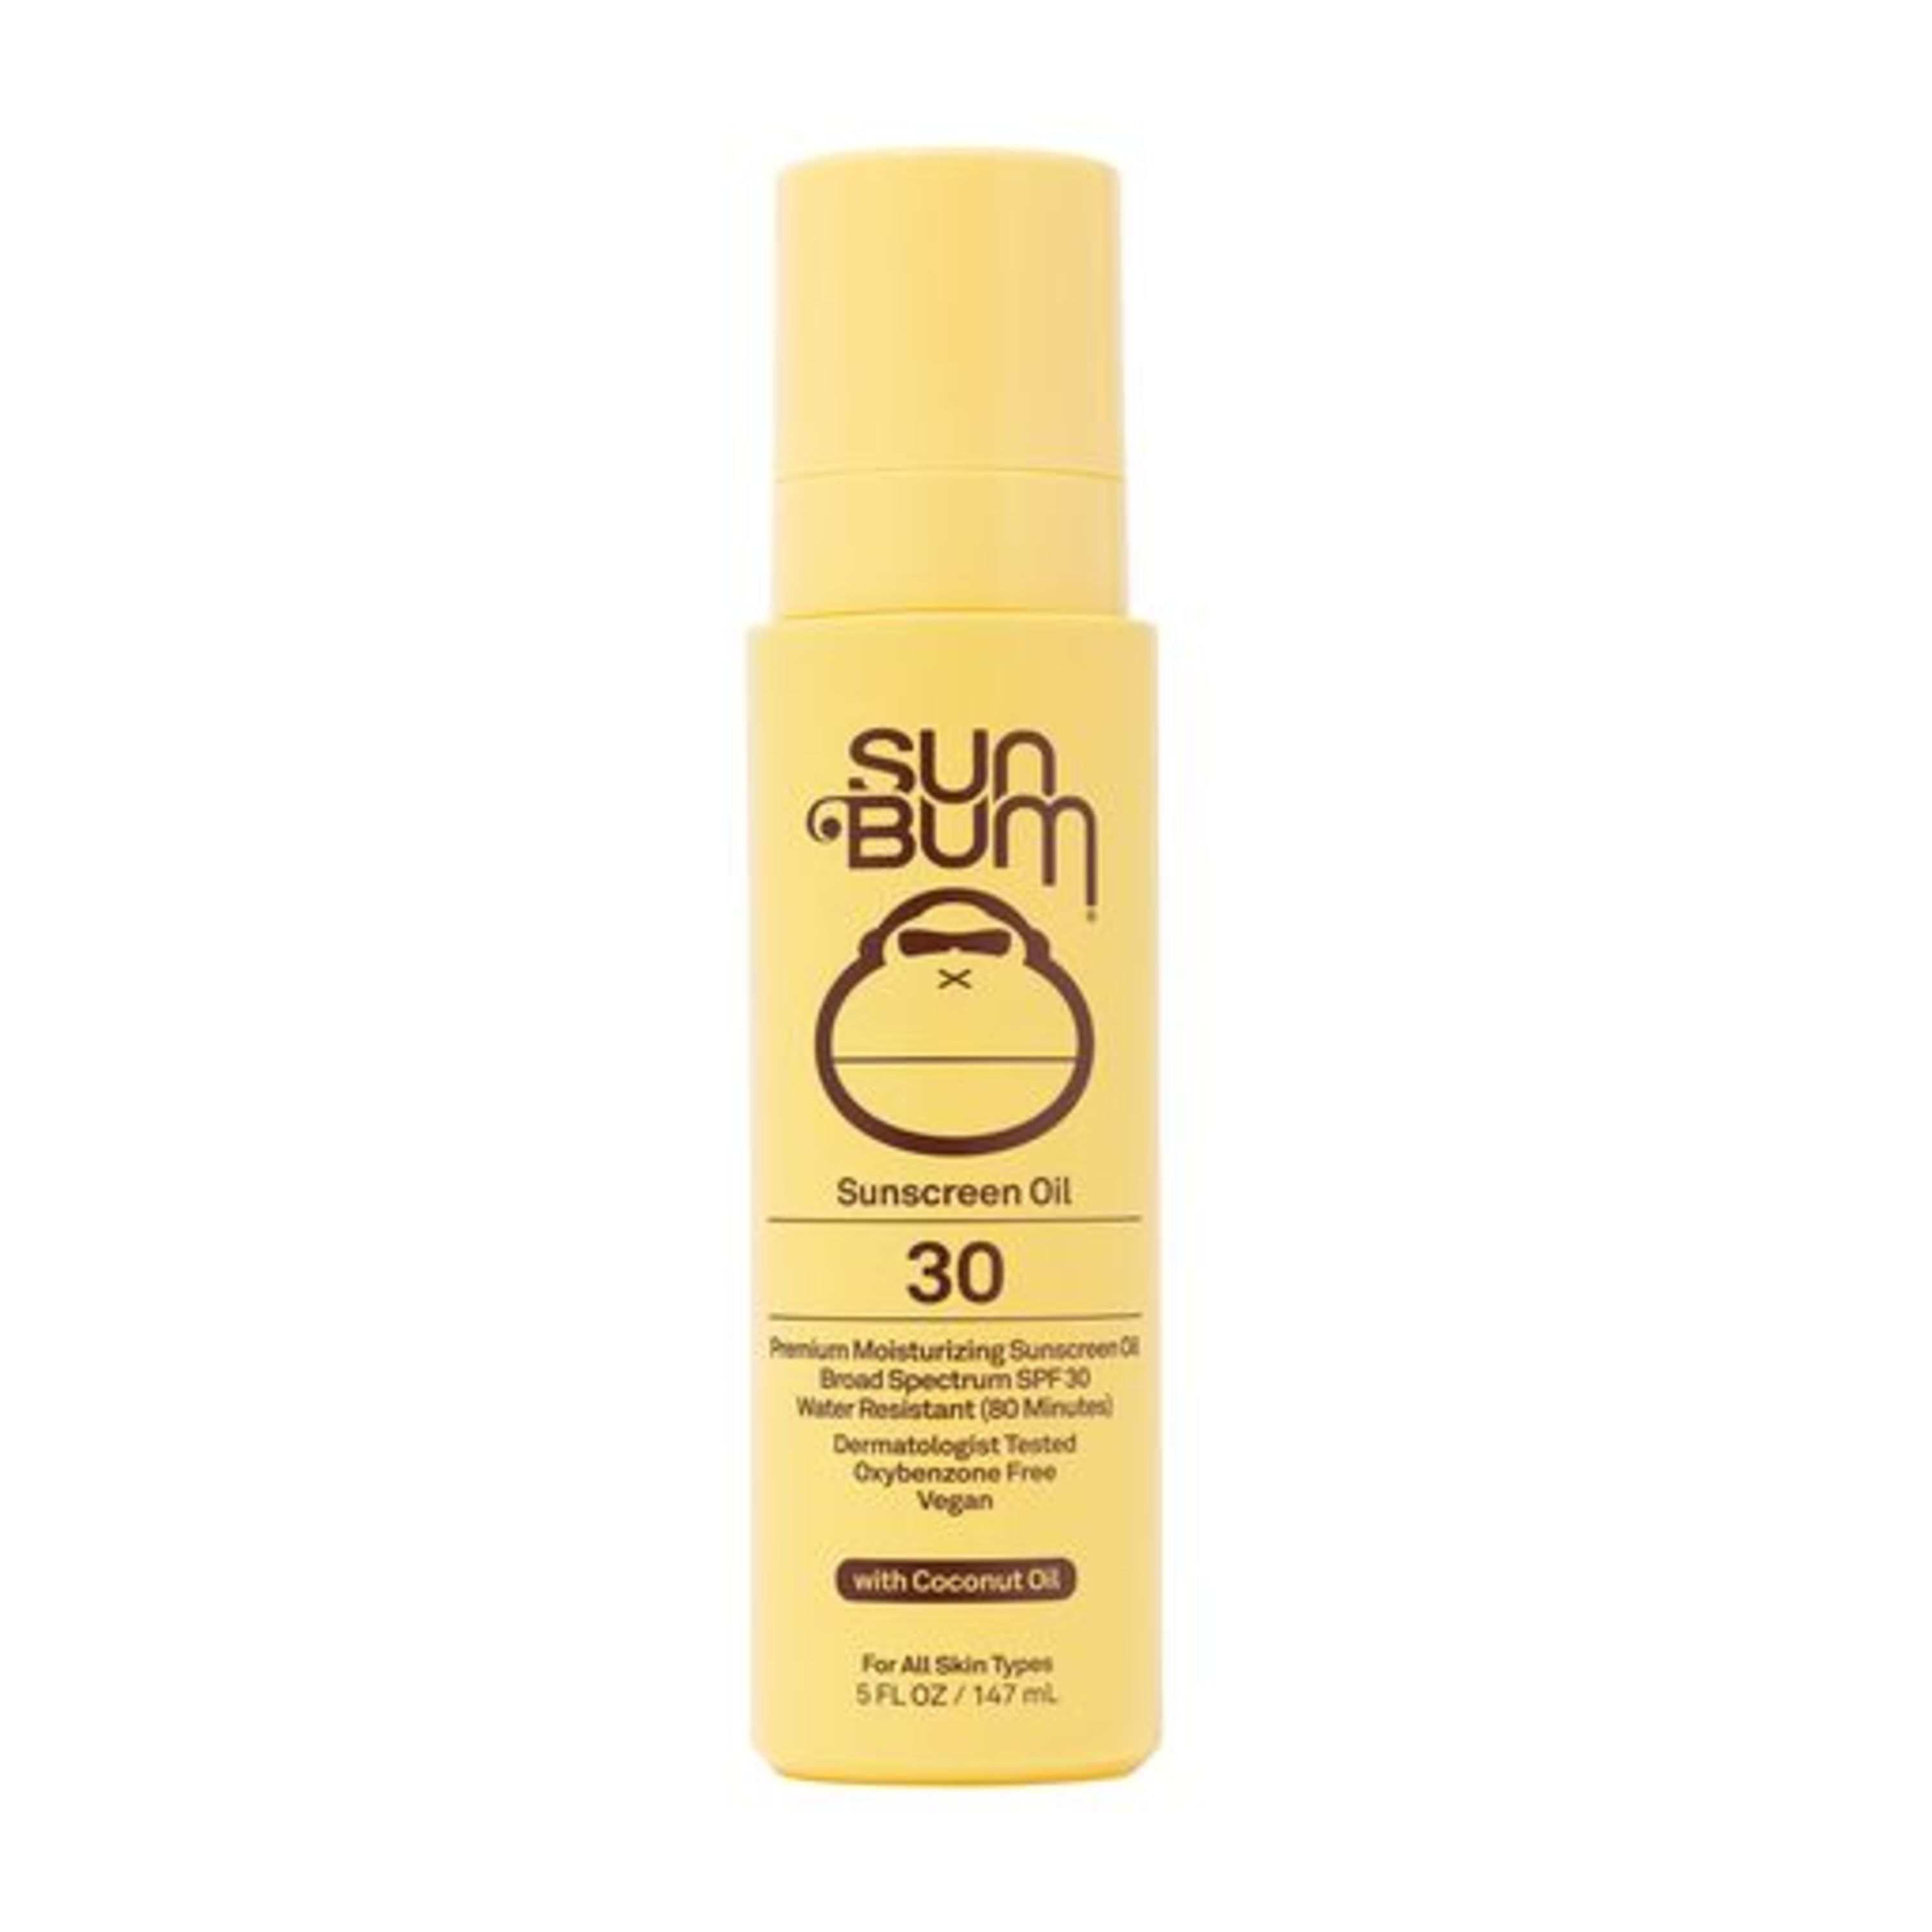 Sun Bum Original SPF 30 Sunscreen Oil, 5 OZ